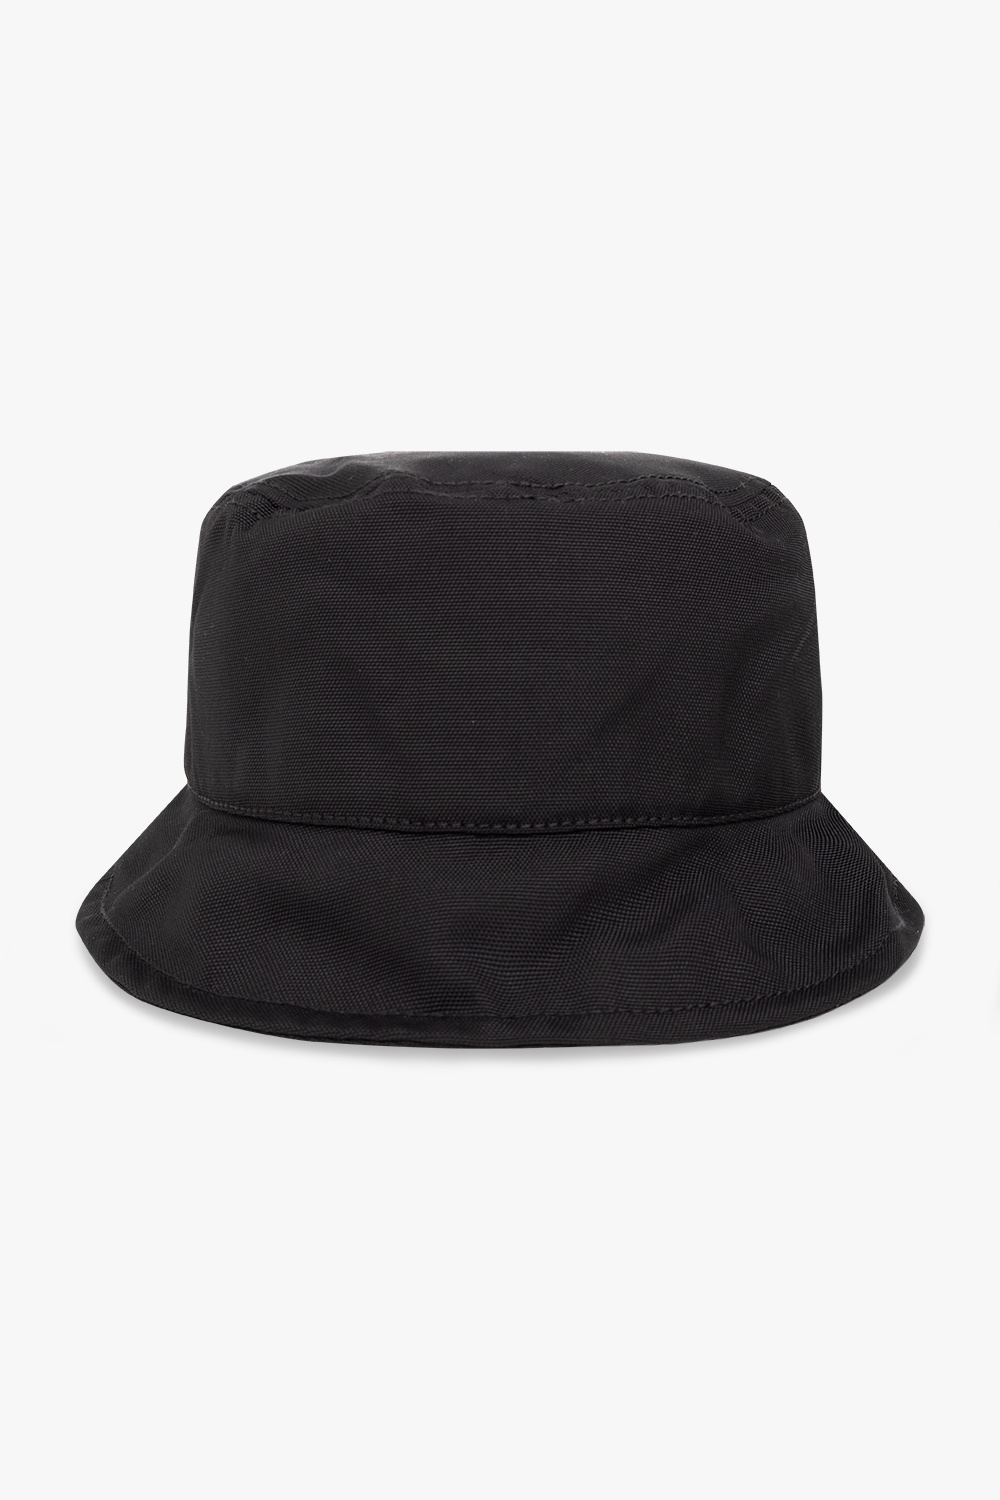 44 Label Group HERON PRESTON Ctnmb Bucket Hat